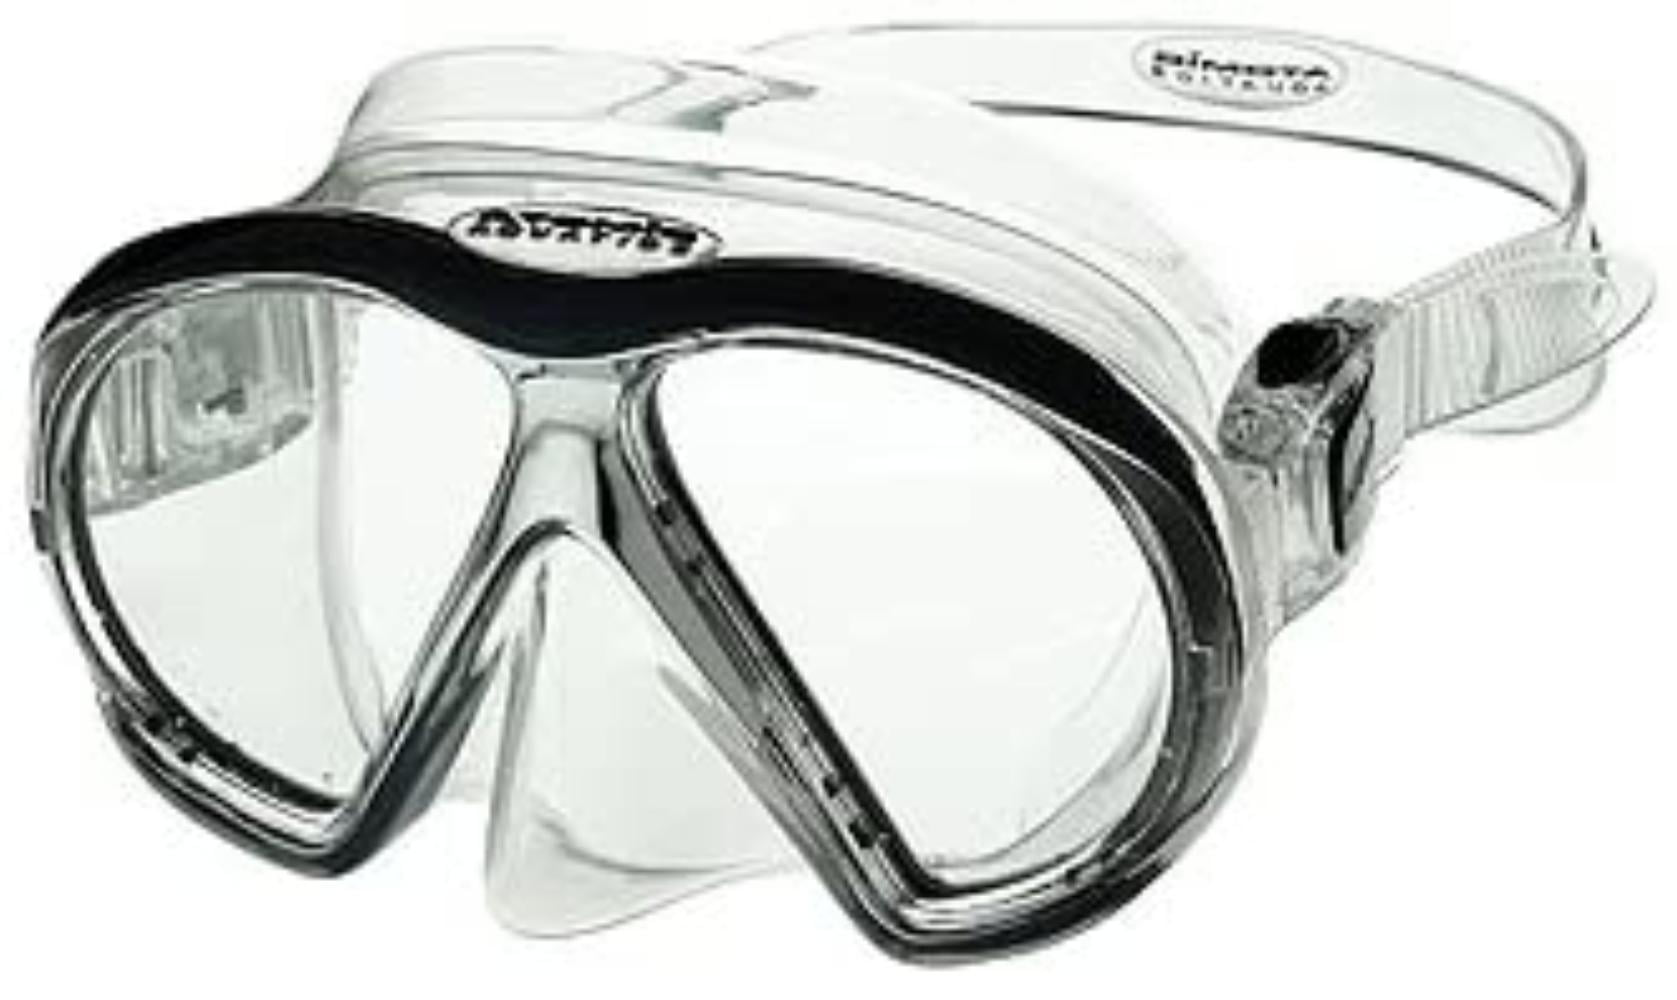 Atomic Aquatics Subframe Scuba Snorkeling Dive Mask CBK for sale online 